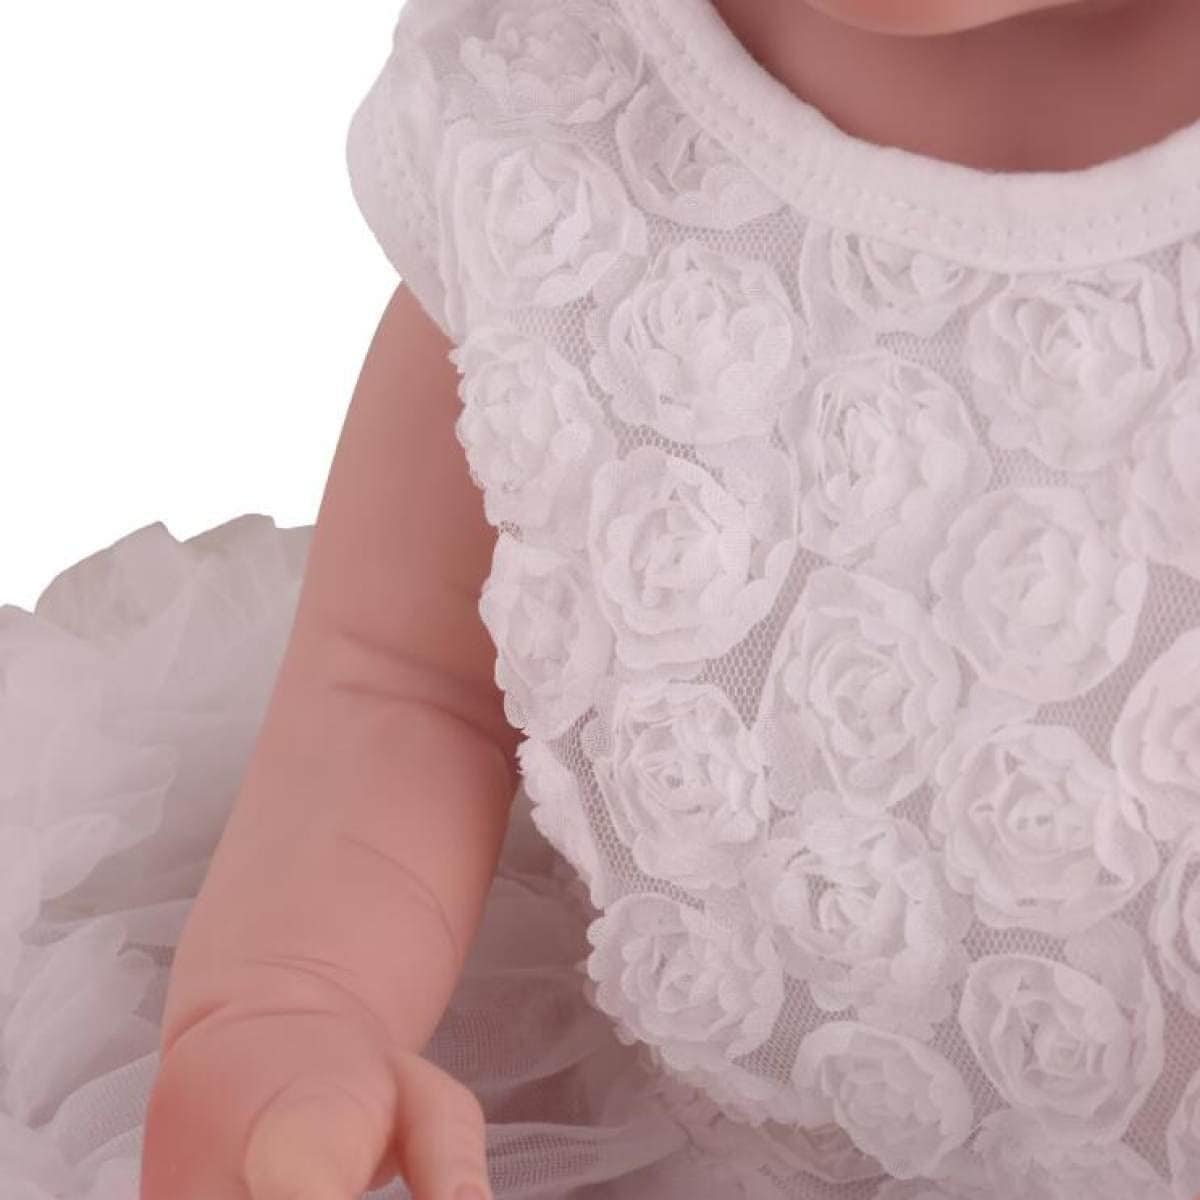 Reborn Baby Dolls Re... : おもちゃ・知育 爆買い国産